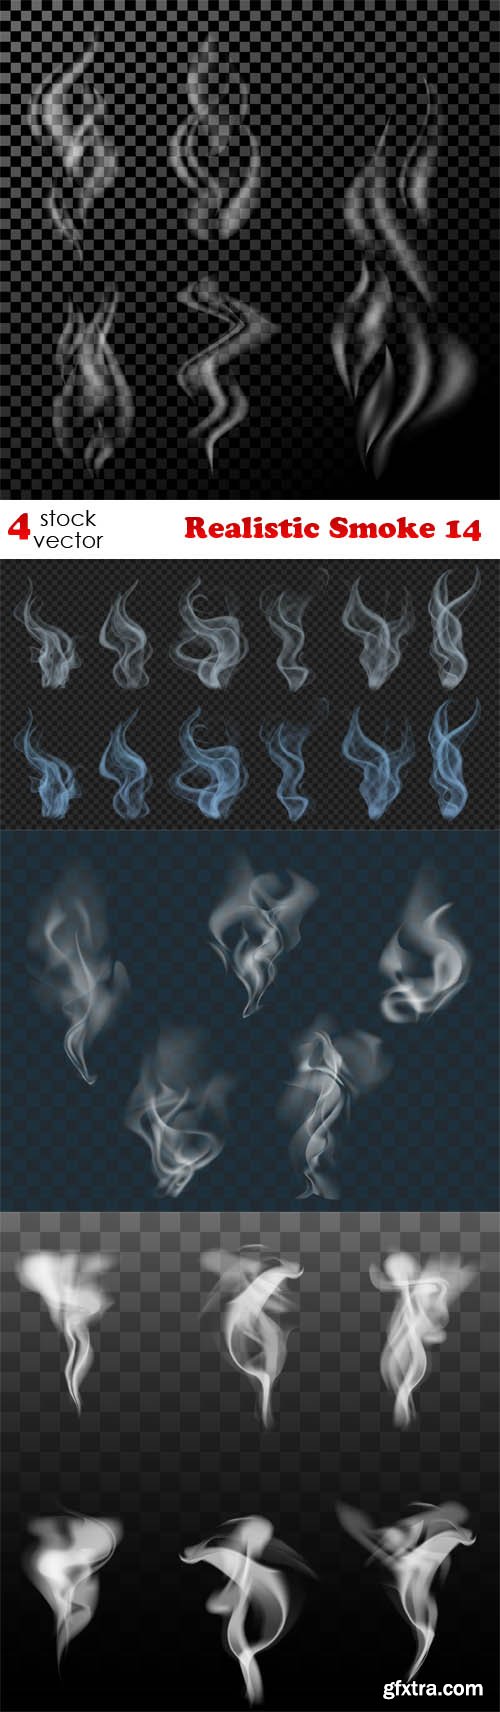 Vectors - Realistic Smoke 14